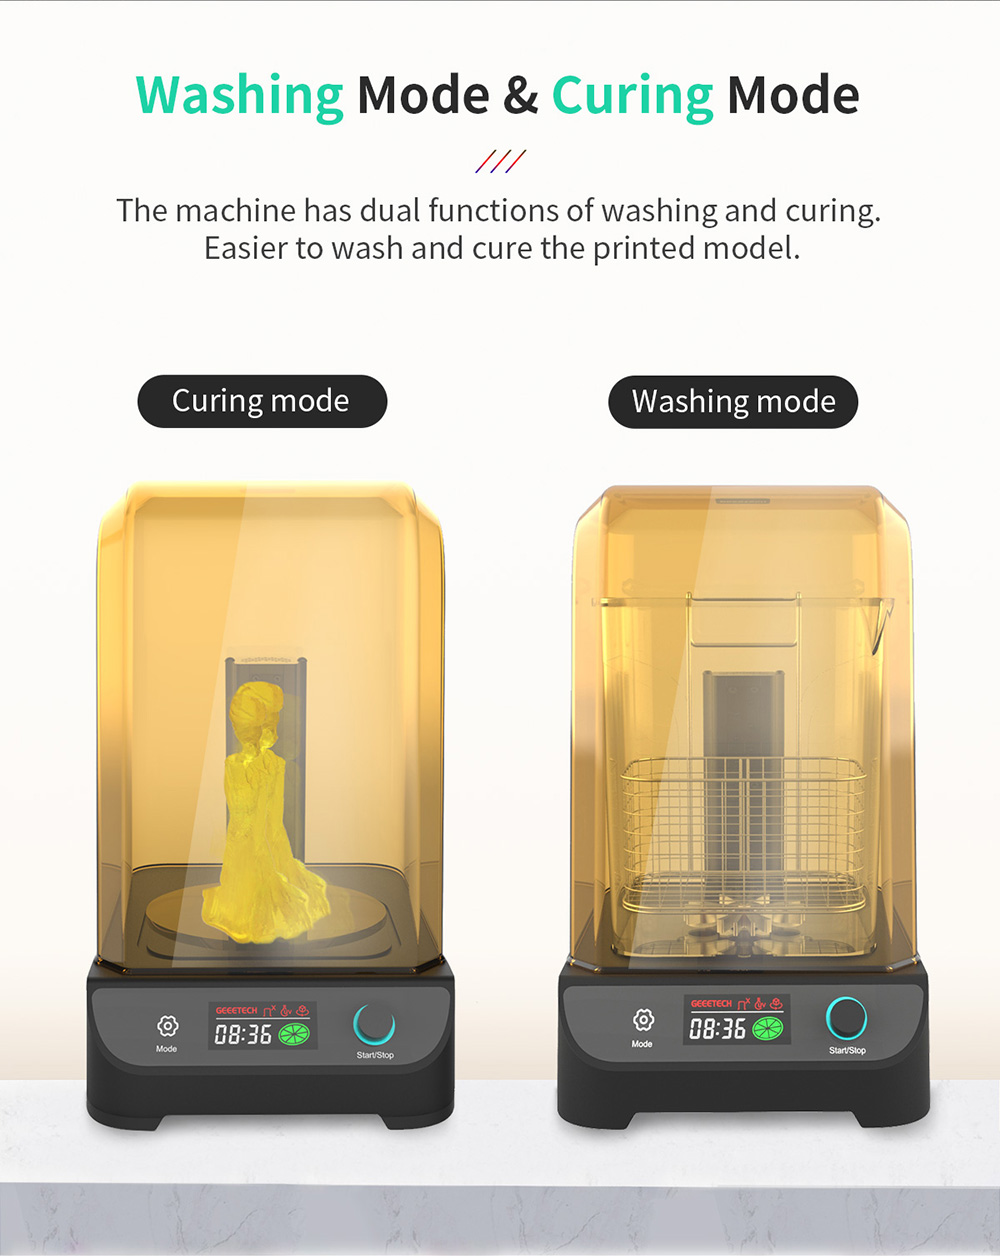 geeetech gcw02 wash and cure machine description of washing mode & curing mode